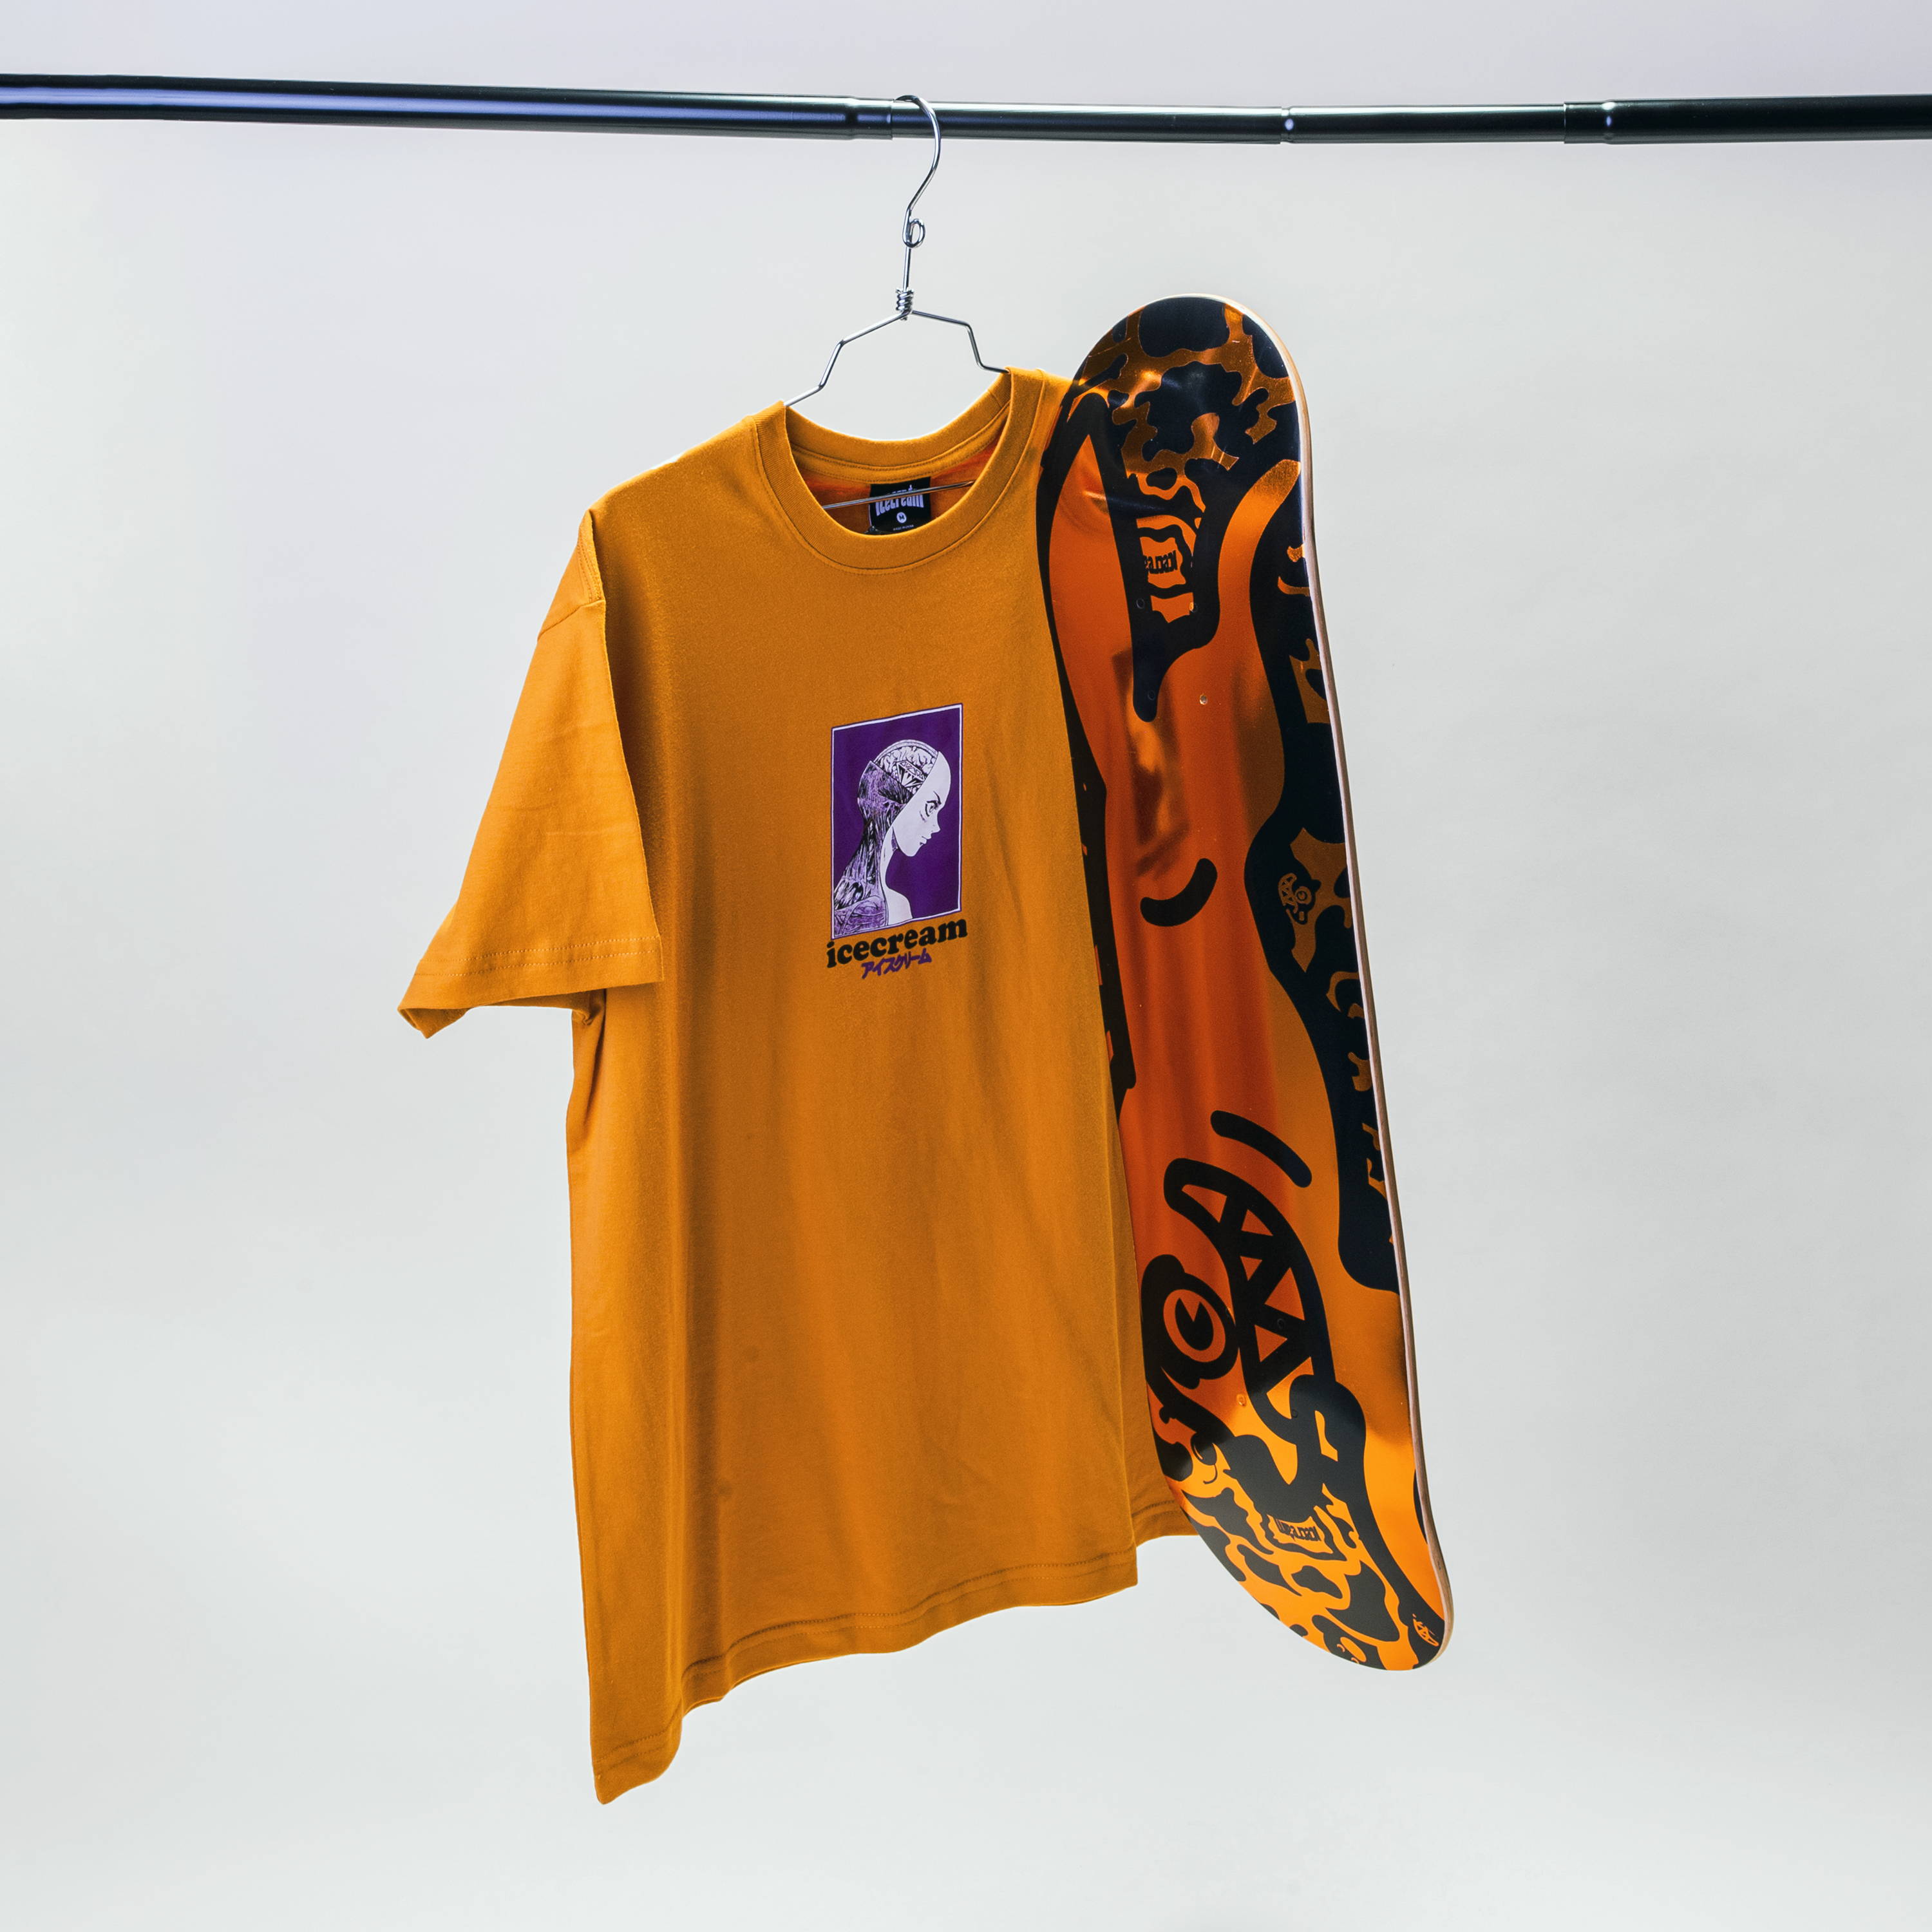 orange icecream shirt hanging with skateboard